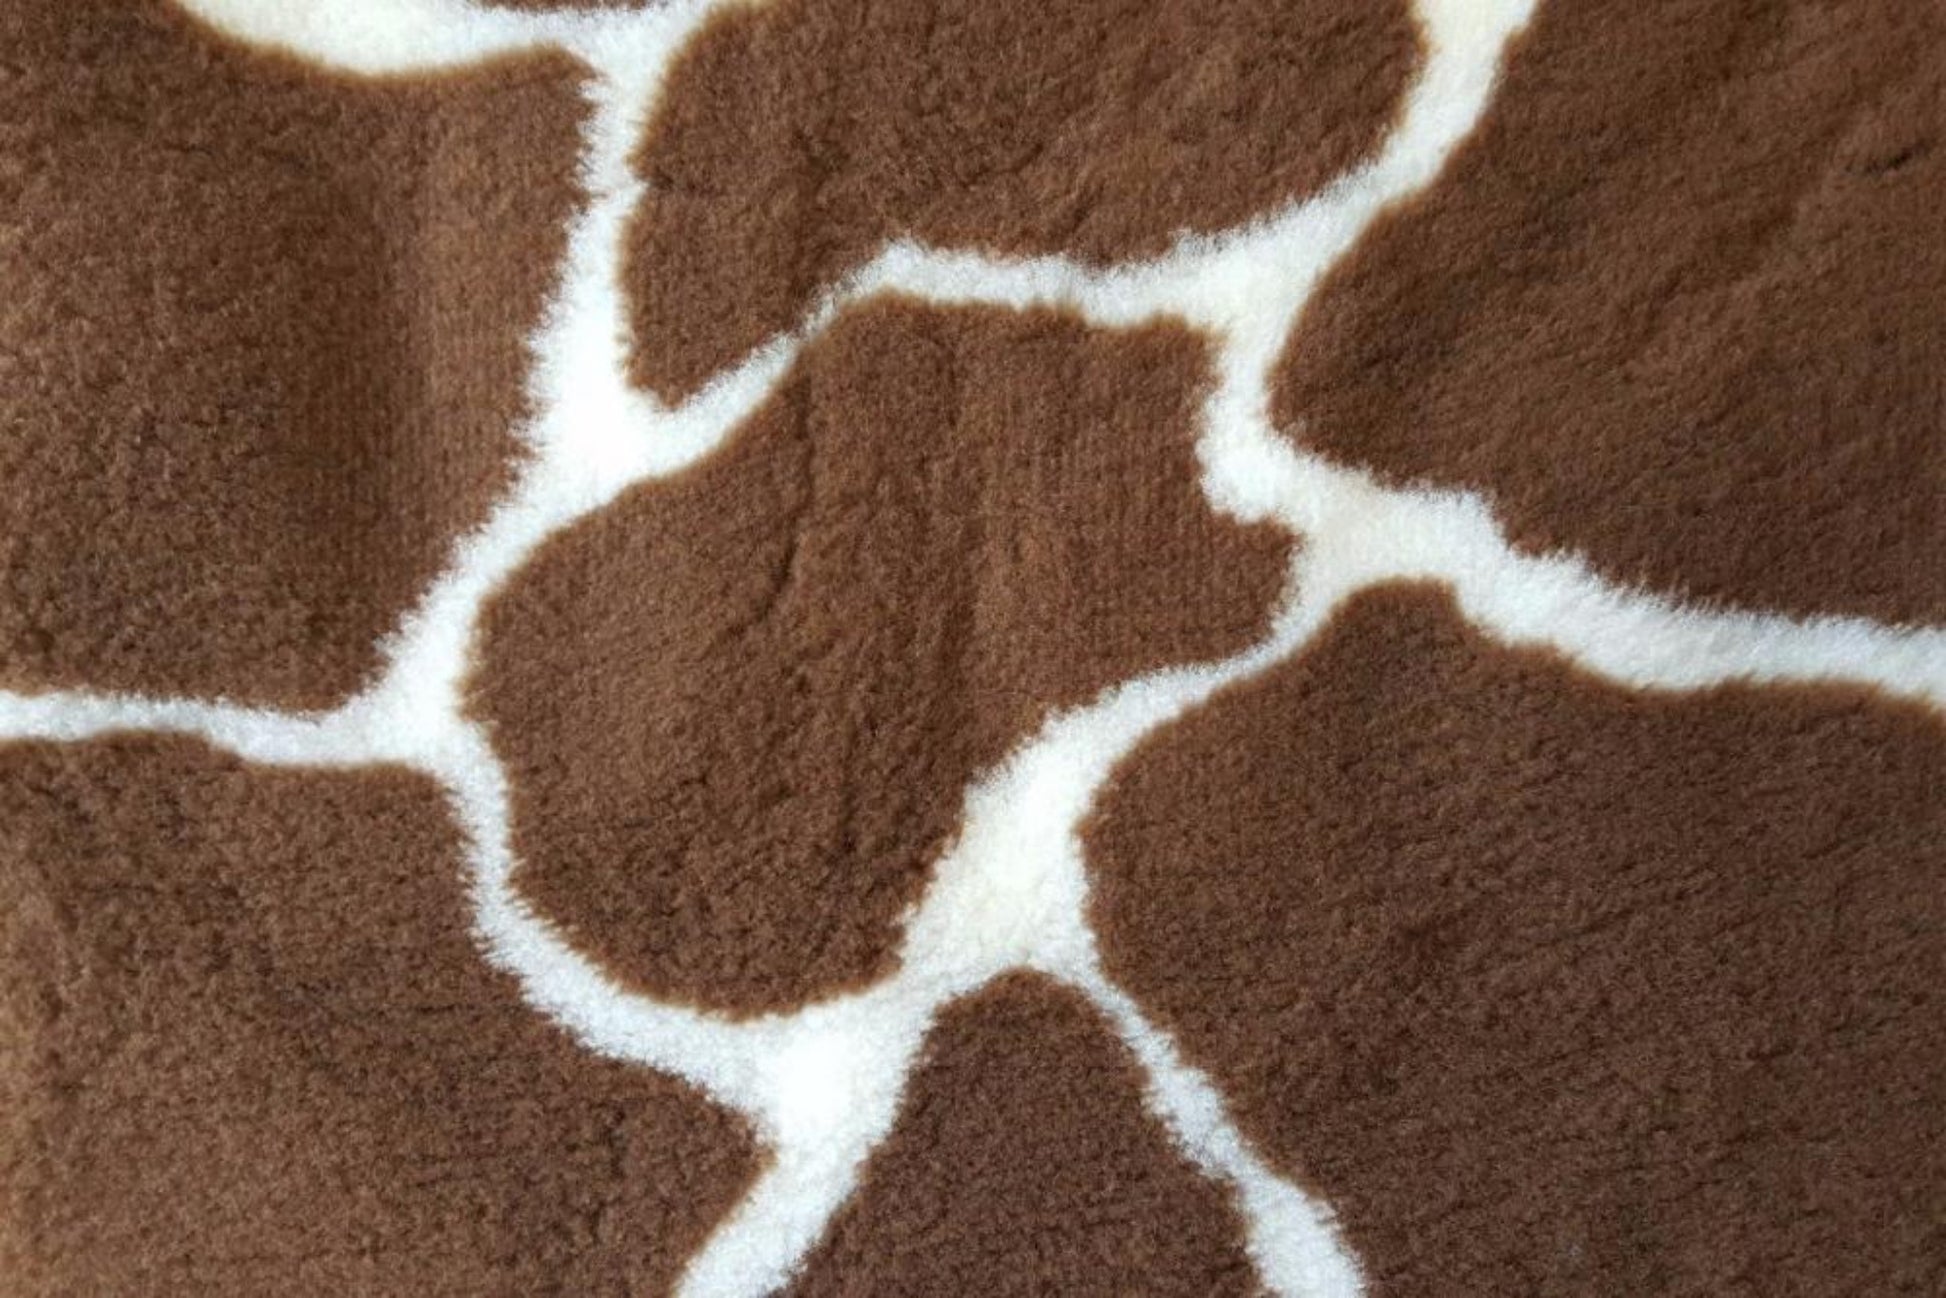 Vet Bed - Rubber Backed - Brown and Cream Giraffe Print